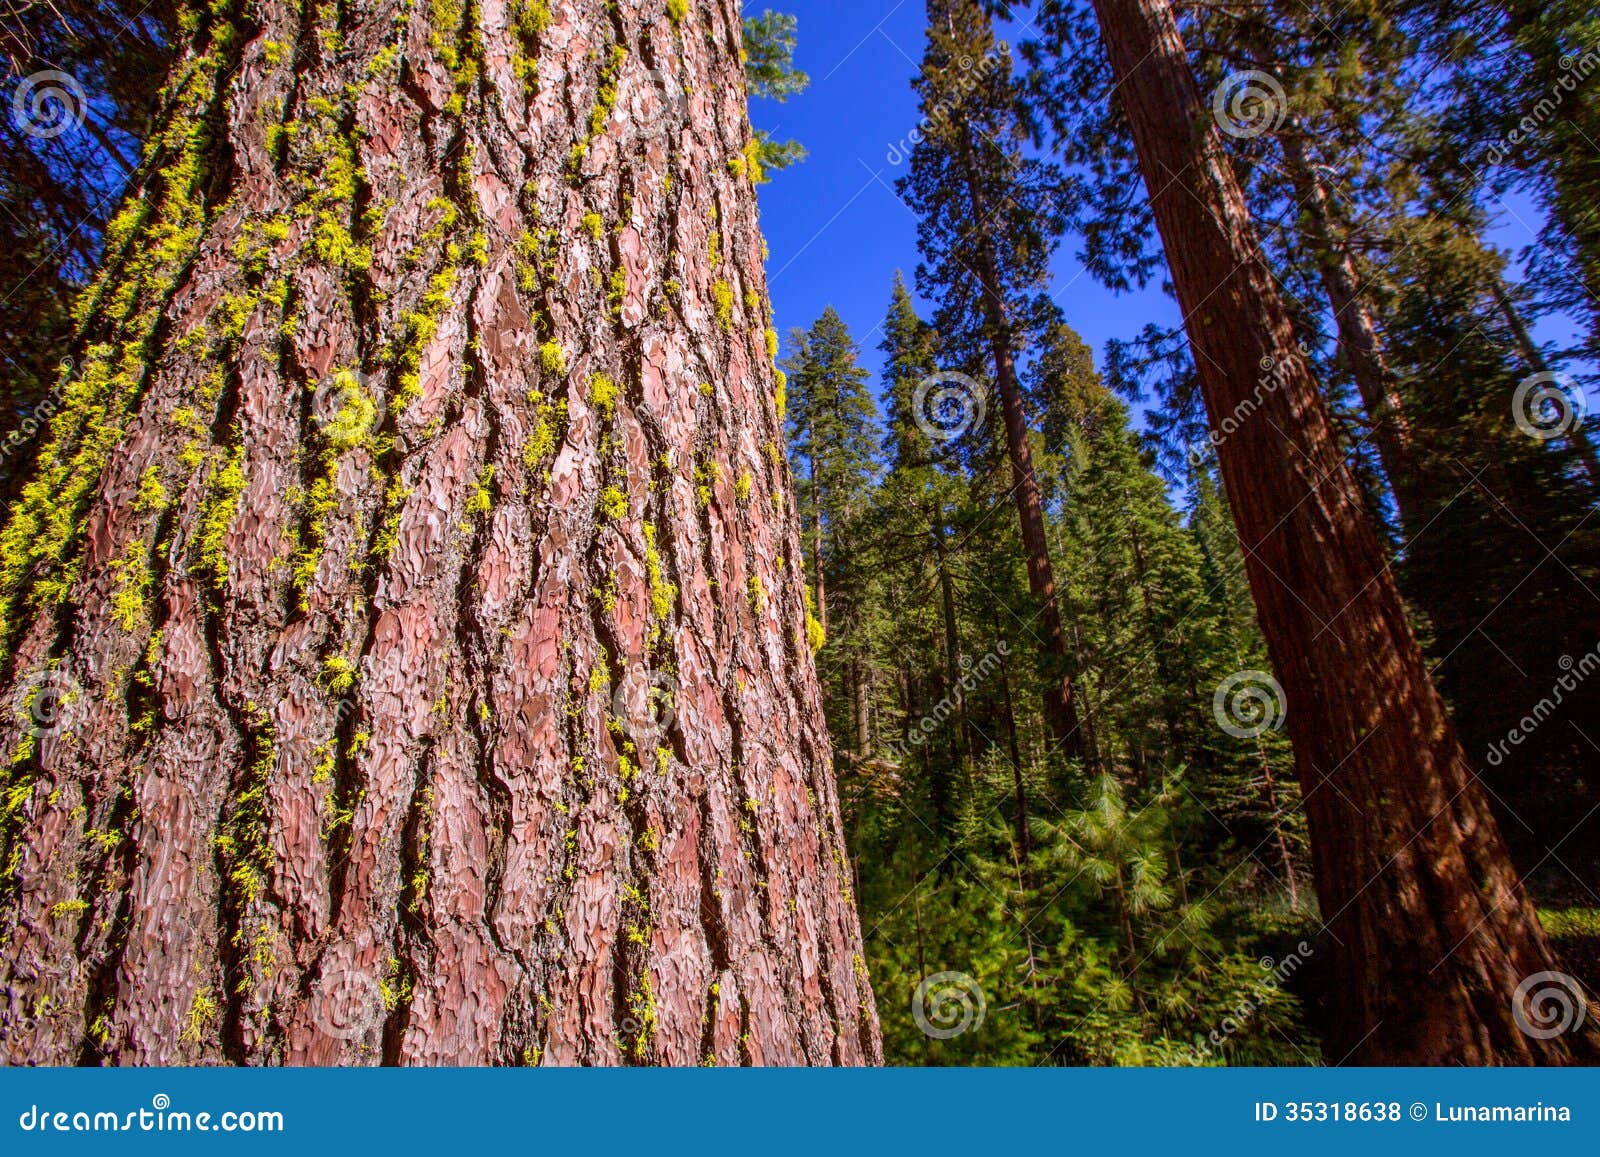 sequoias in mariposa grove at yosemite california